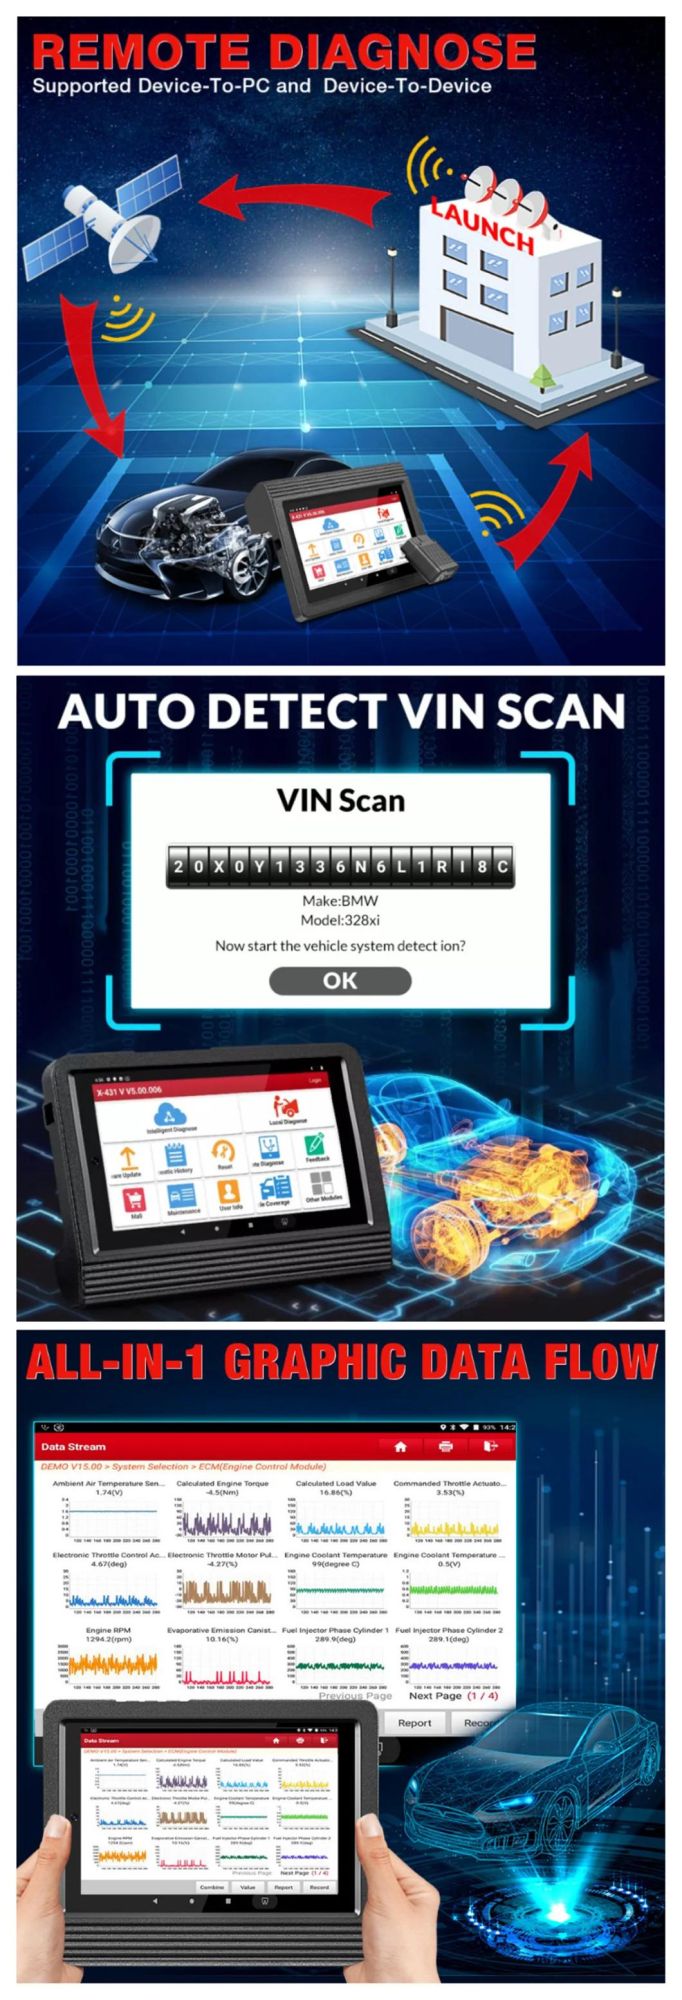 Free Shipping Global Version Launch X431 V V4.0 Full System Auto Scan Tool Scanpad X-431 V 4.0 No IP Limit